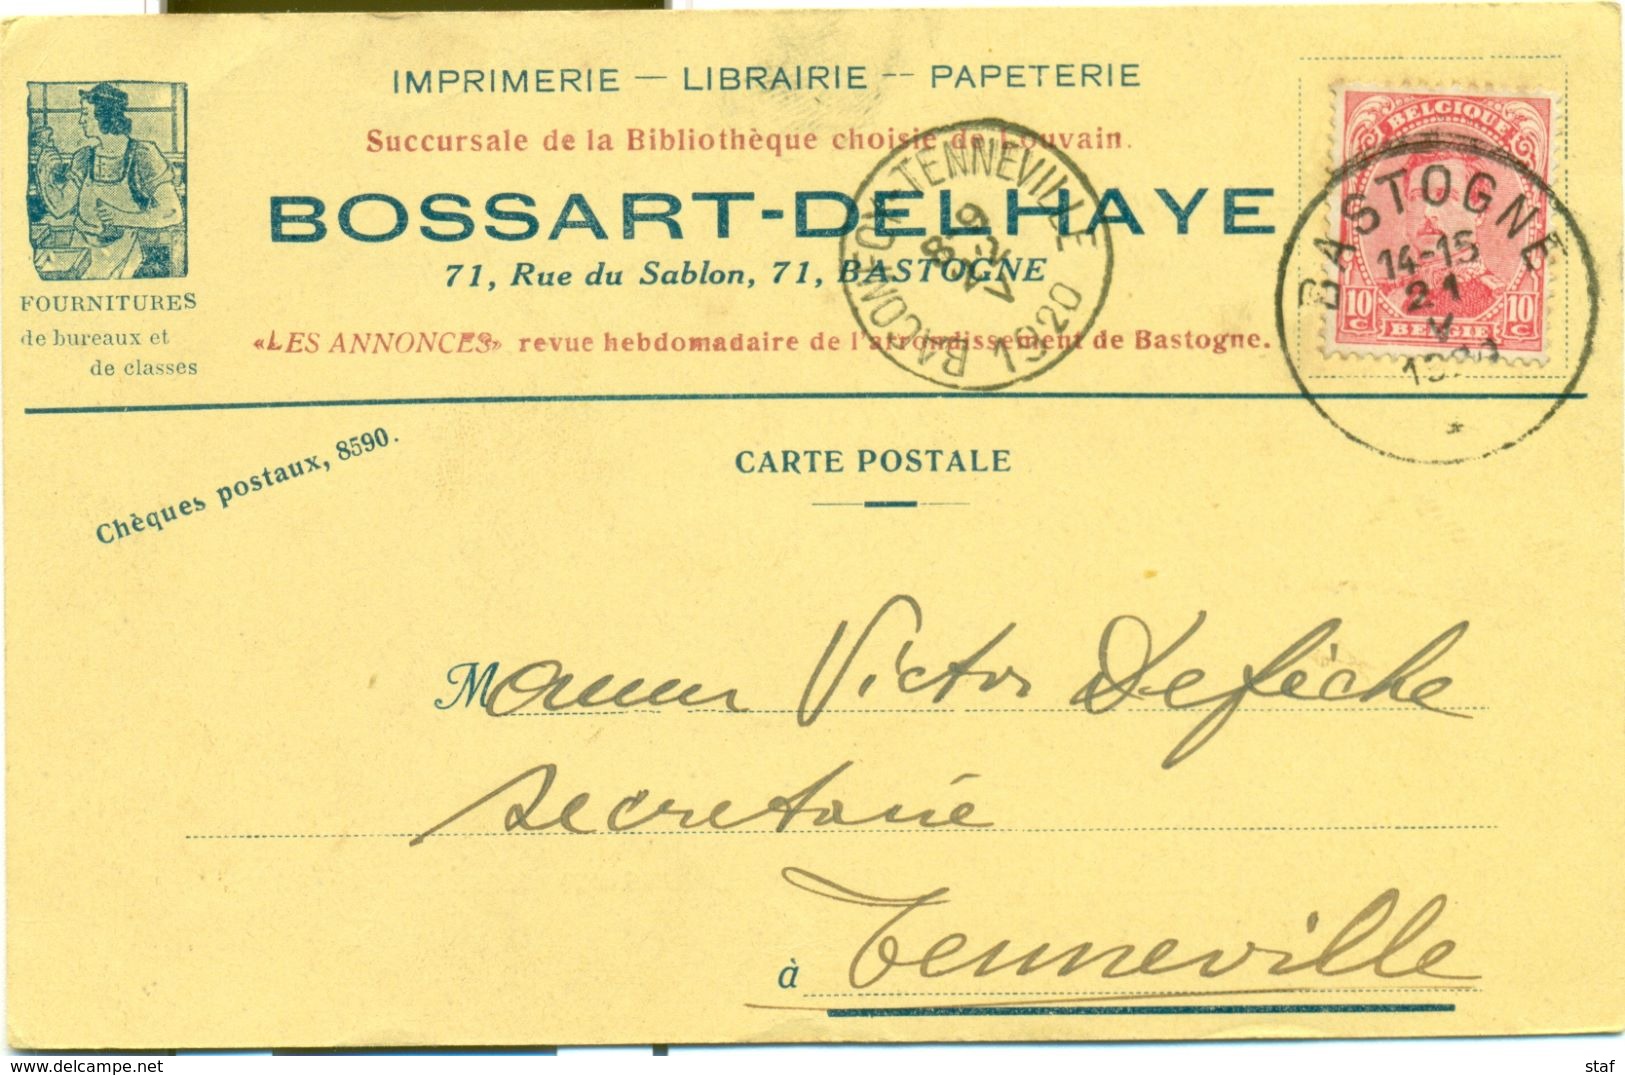 Imprimerie - Librairie - Papéterie Bossart - Delhaye à Bastogne : 1920 - Stamperia & Cartoleria